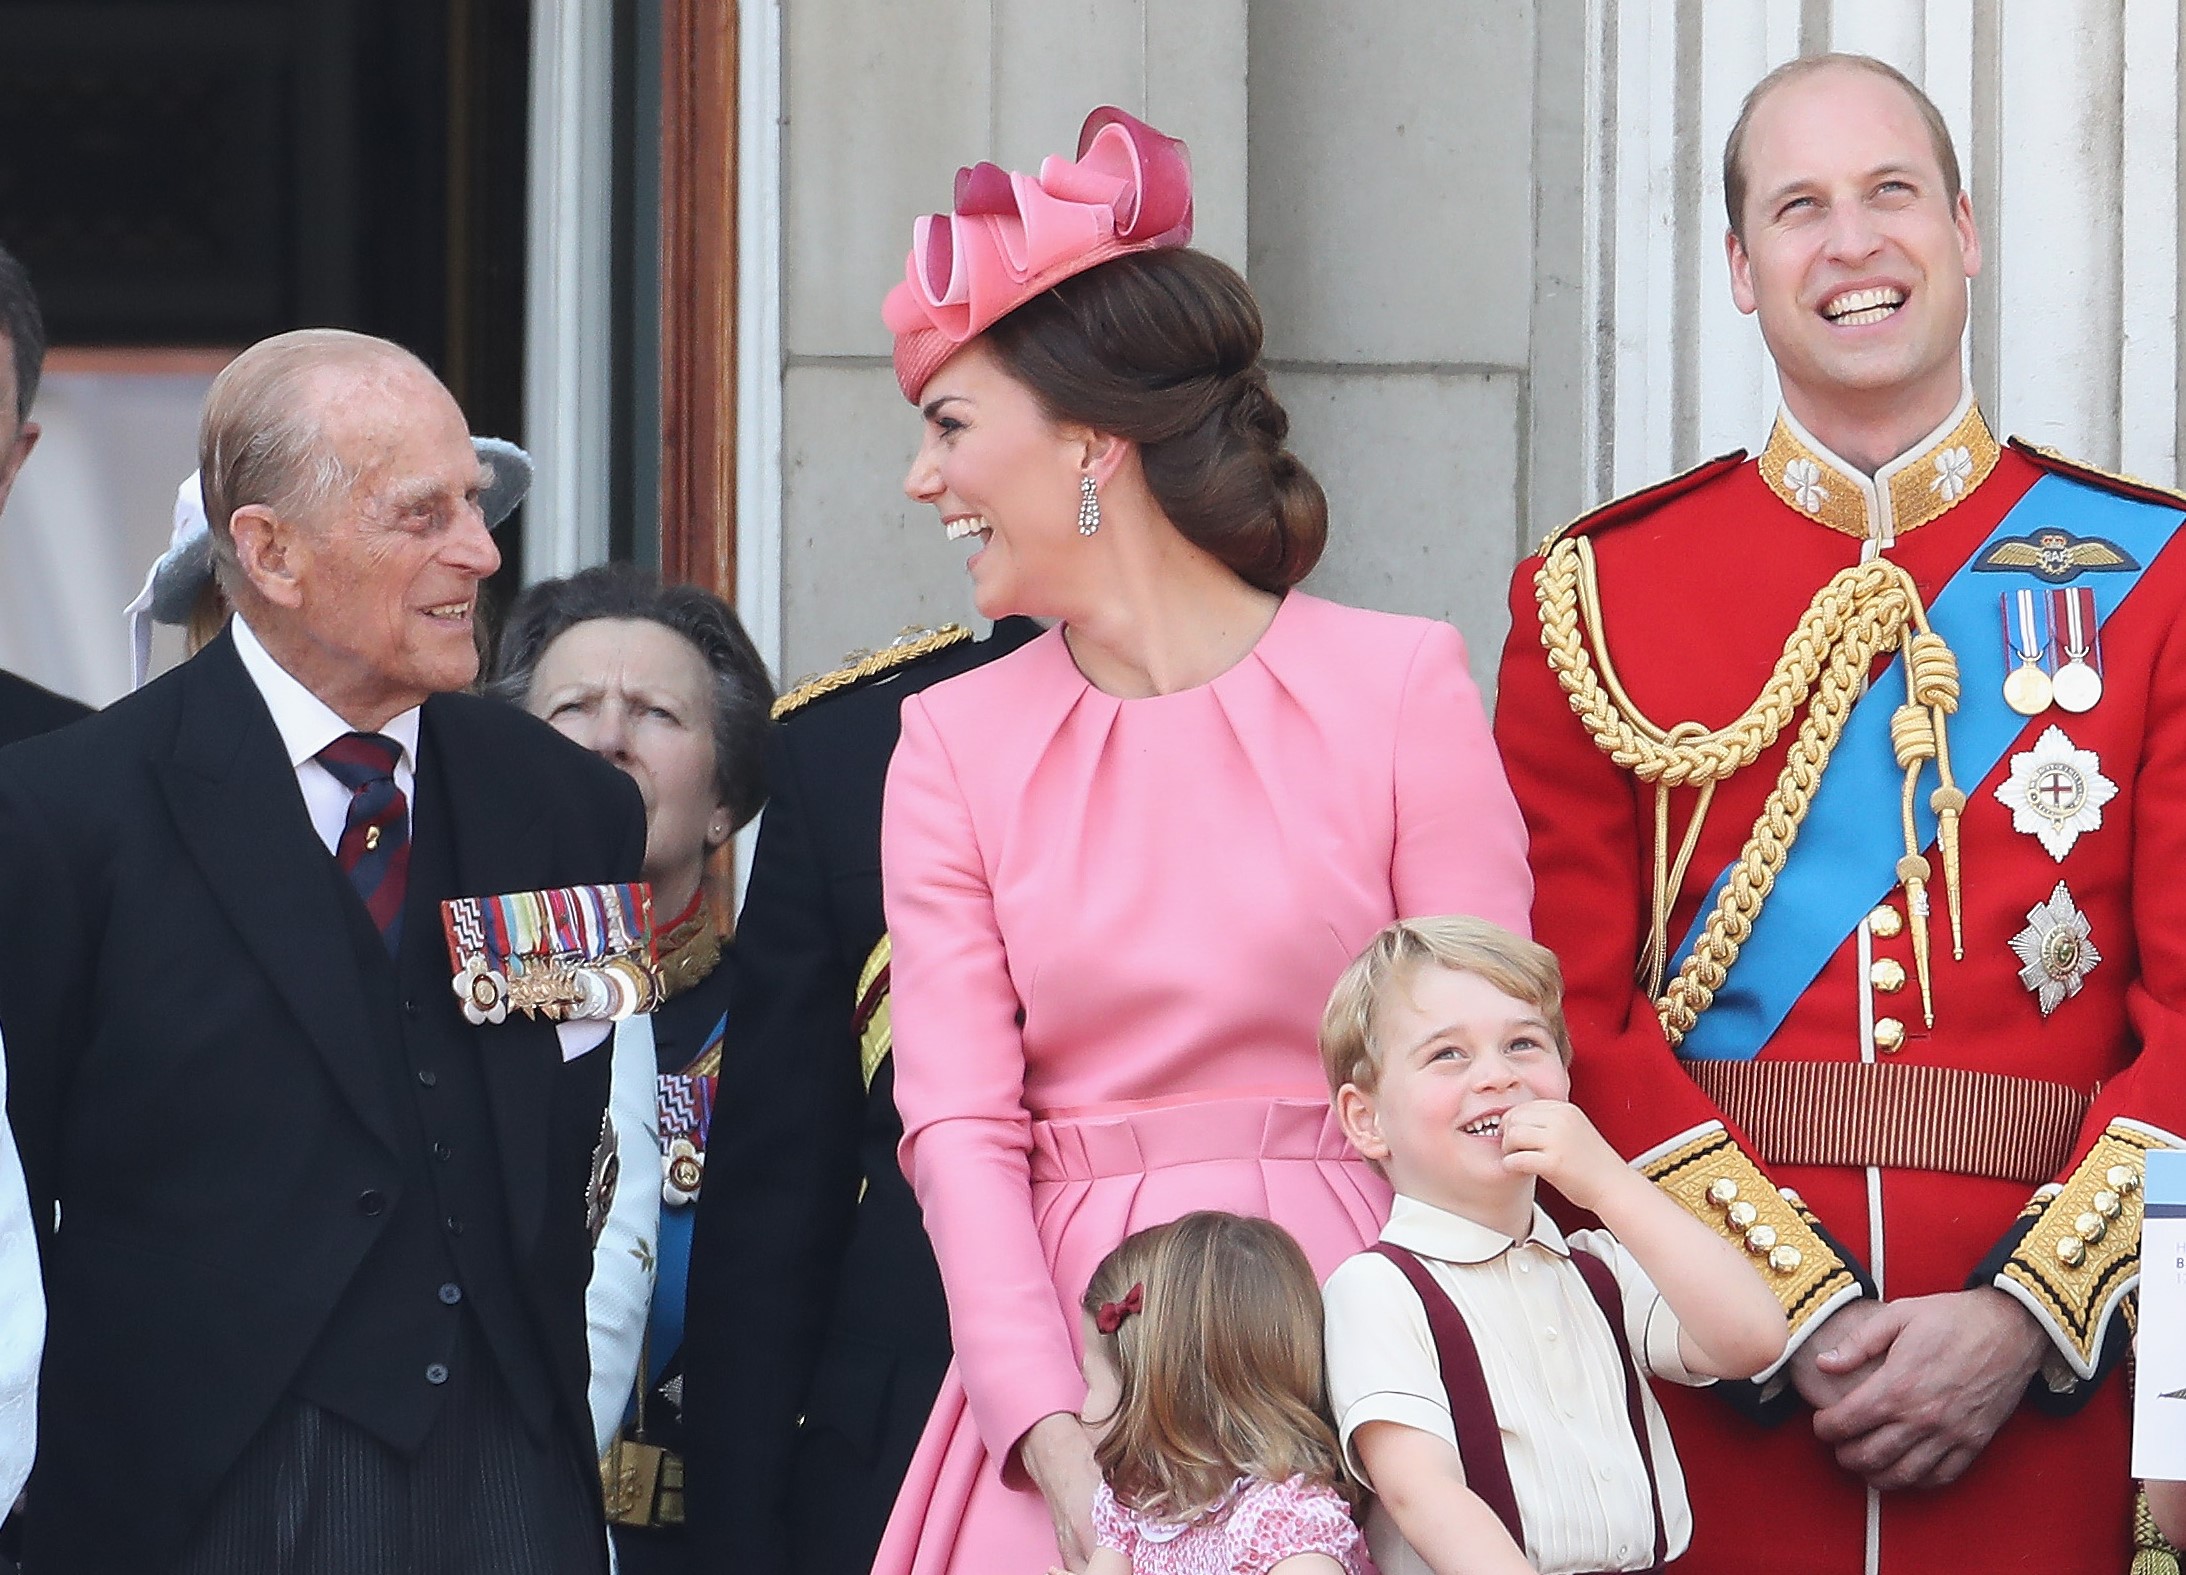 Prince Philip, Kate Middleton, Princess Charlotte, Prince George, and Prince William